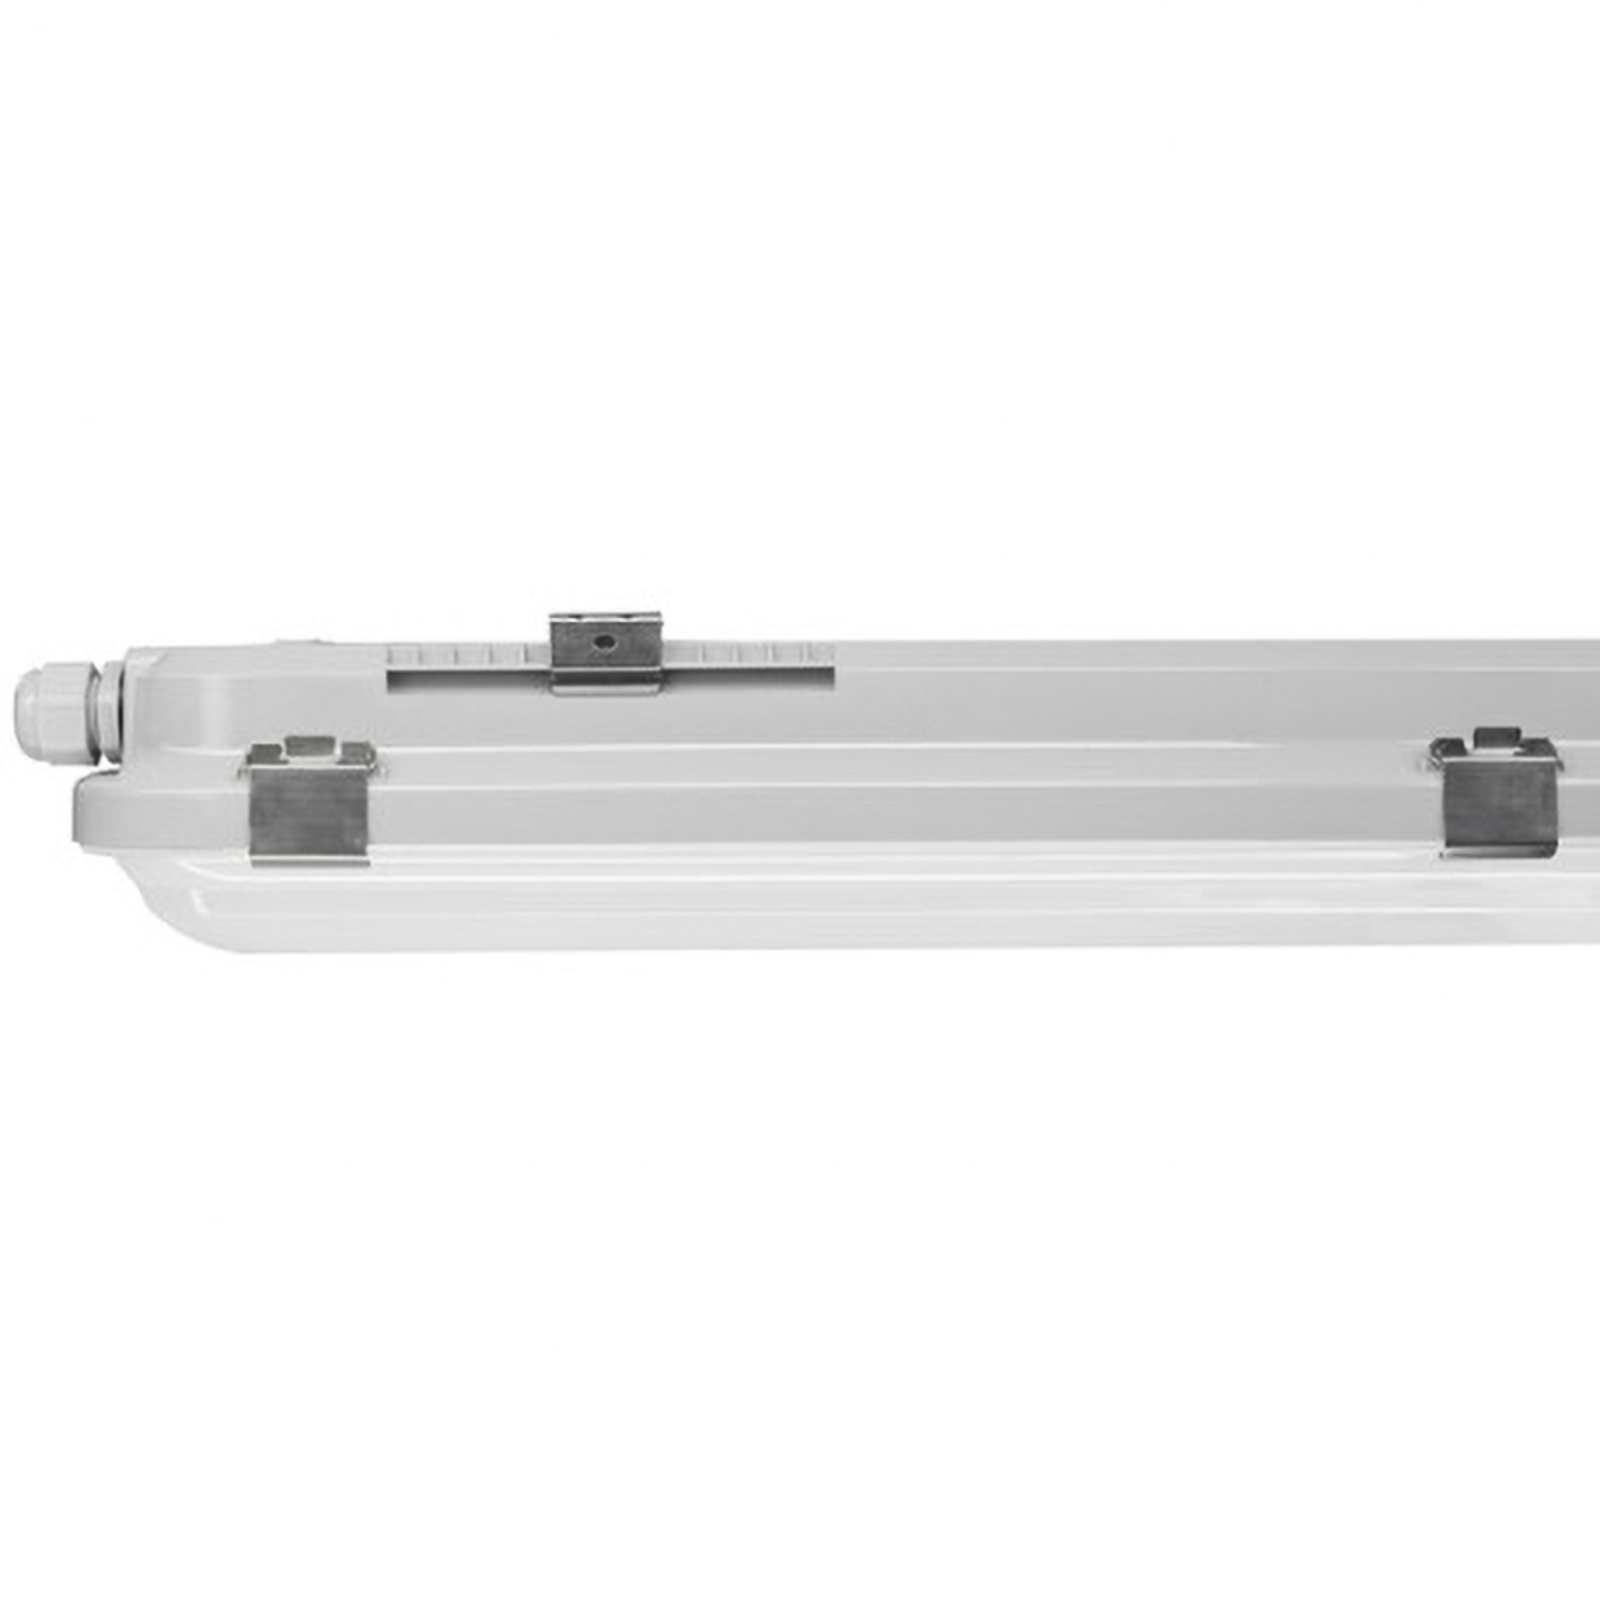 InnoGreen AQUOS 3.0 BASELine LED-Leuchte 67cm 850